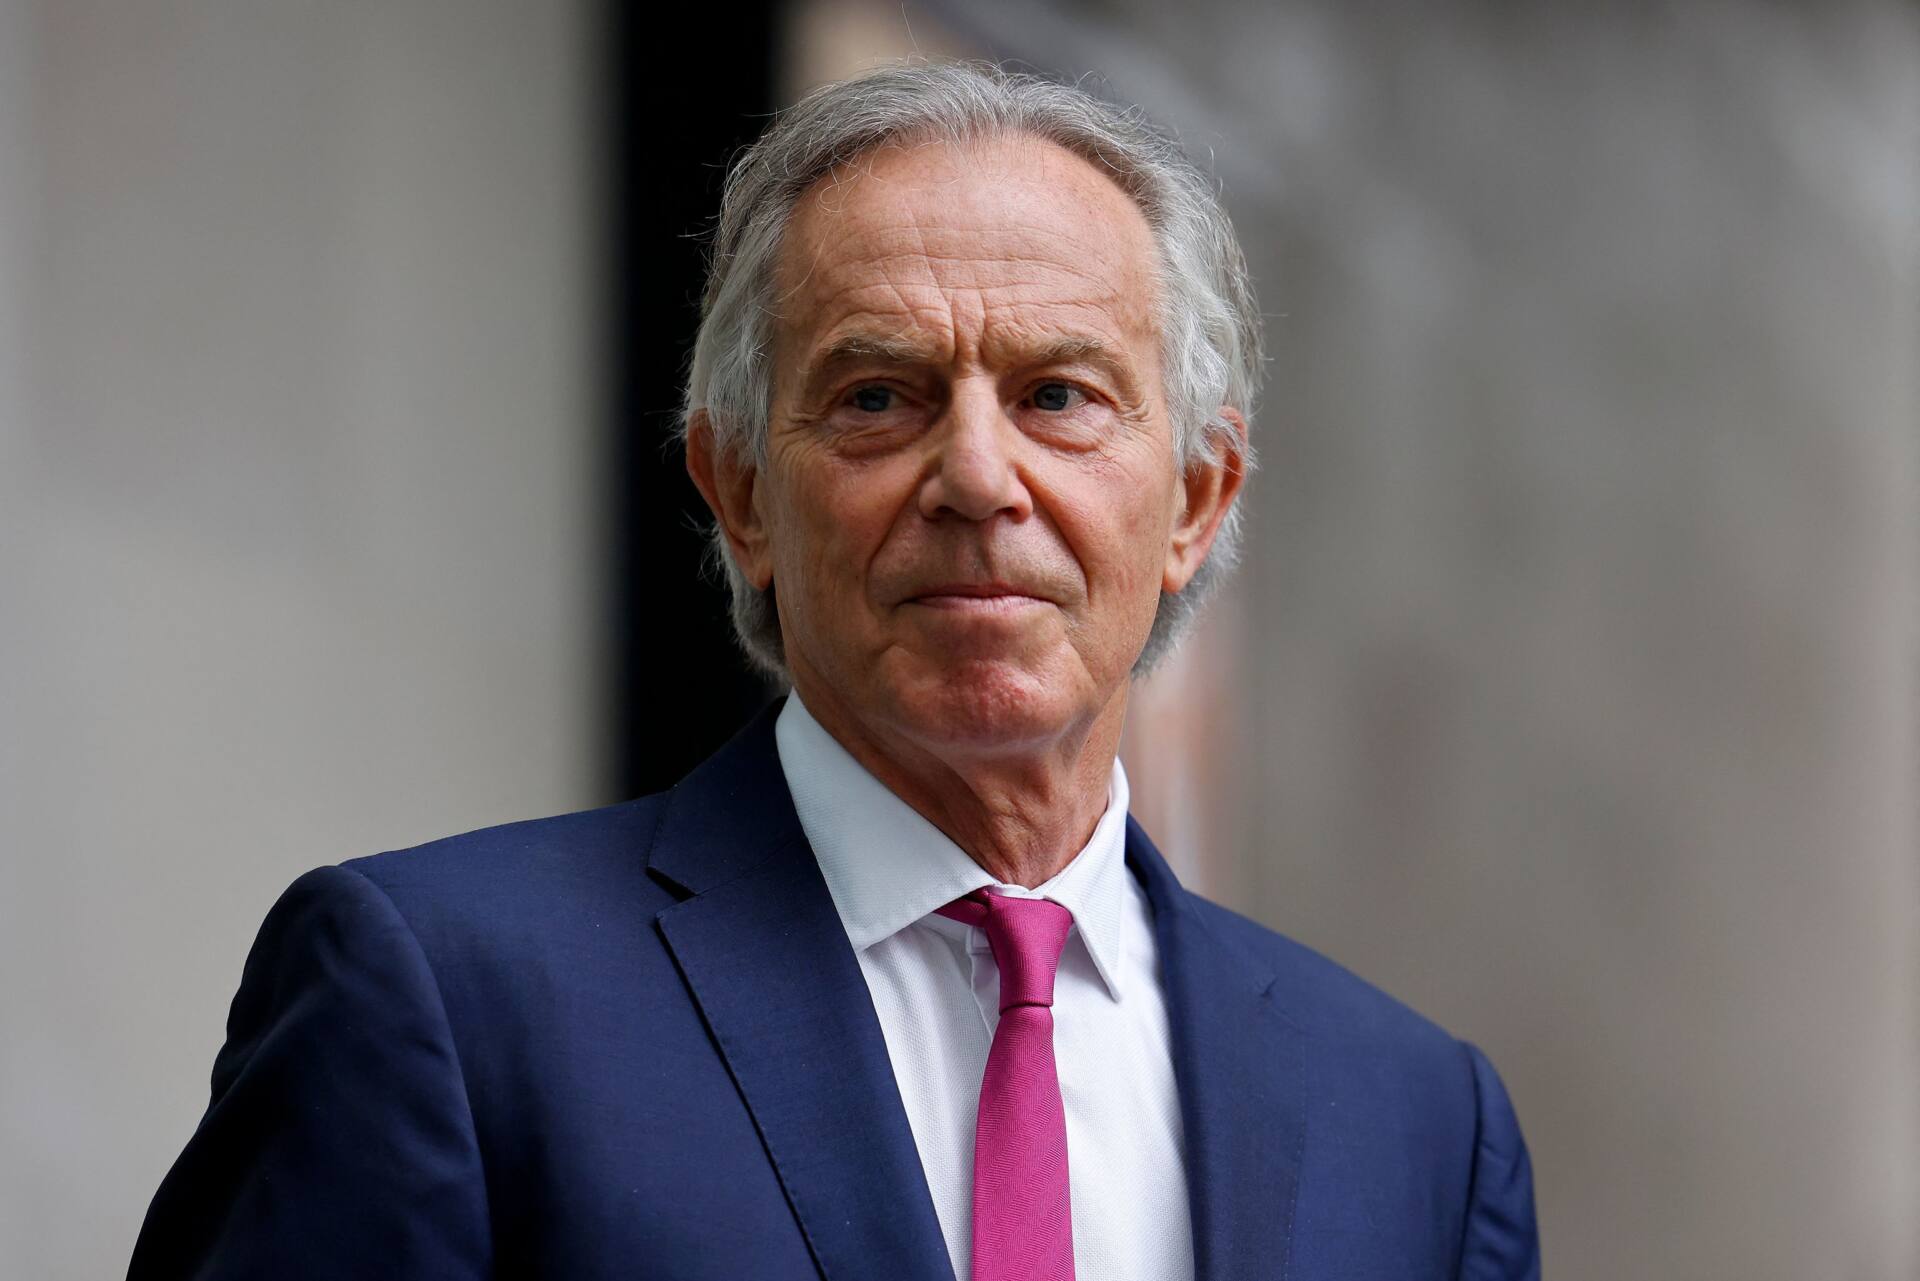 Tony Blair, former British Prime Minister, will attend FIDES Rio 2023